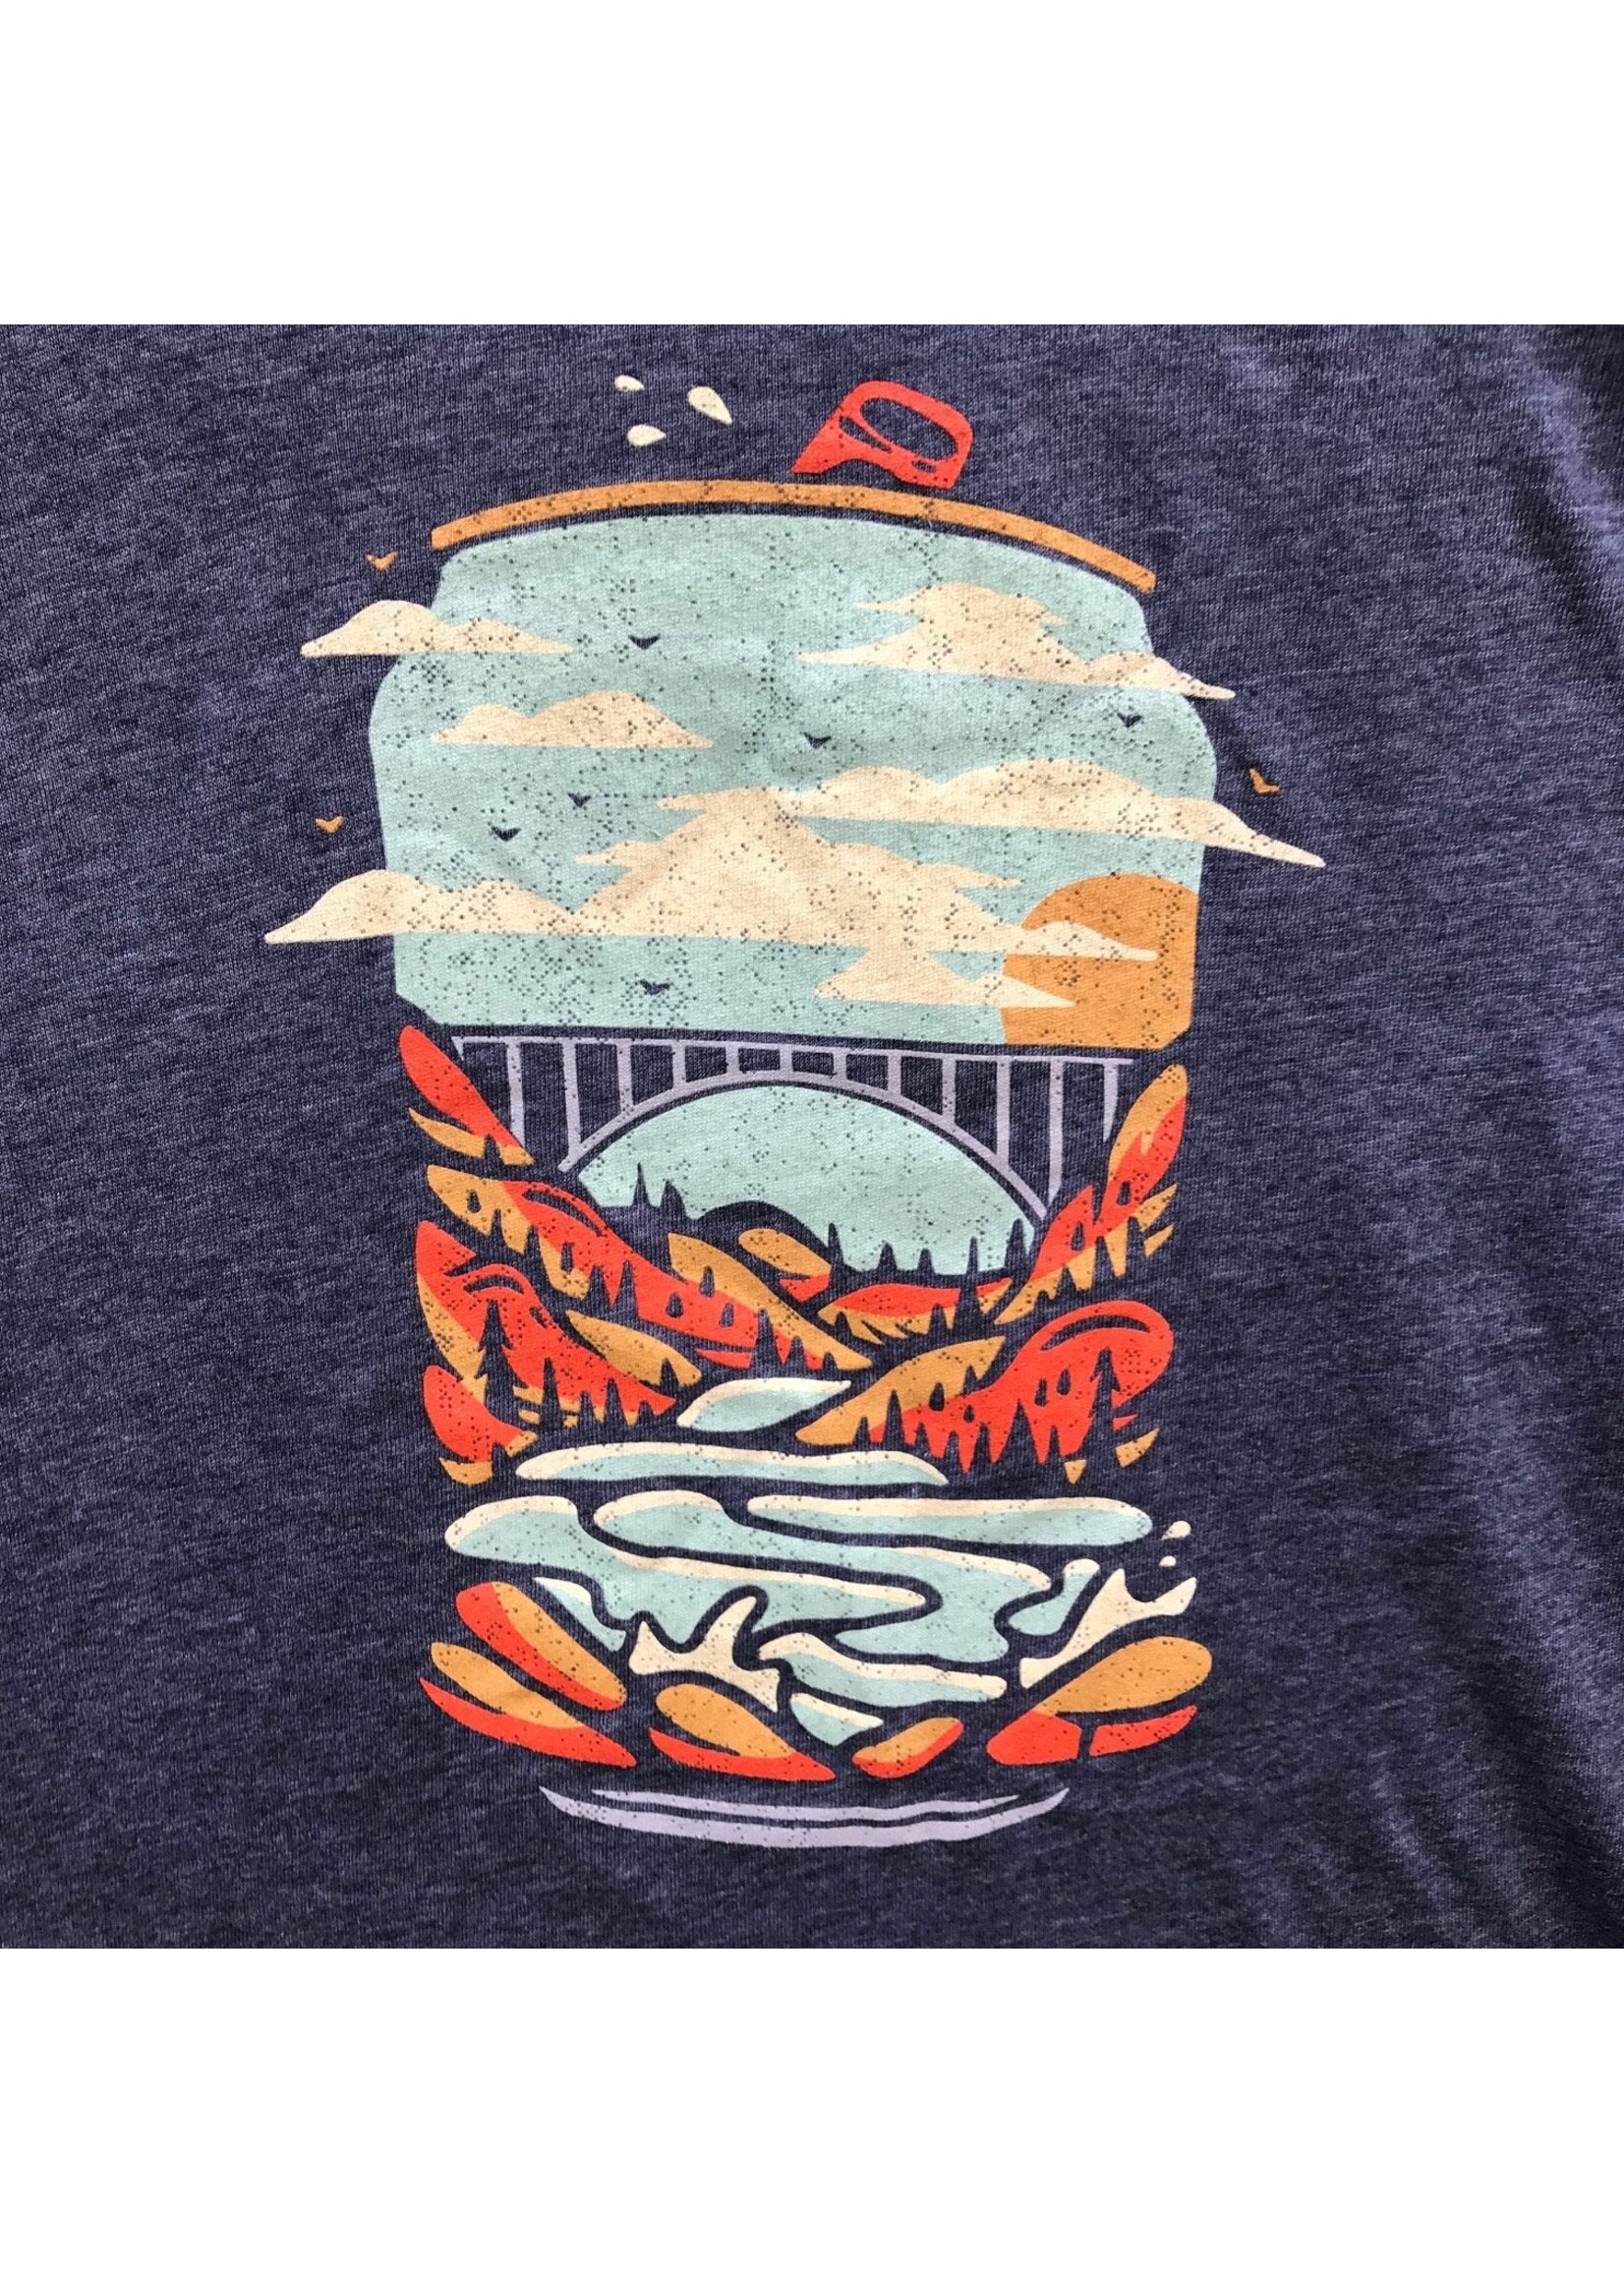 Loving WV New River Gorge Beer T-Shirt